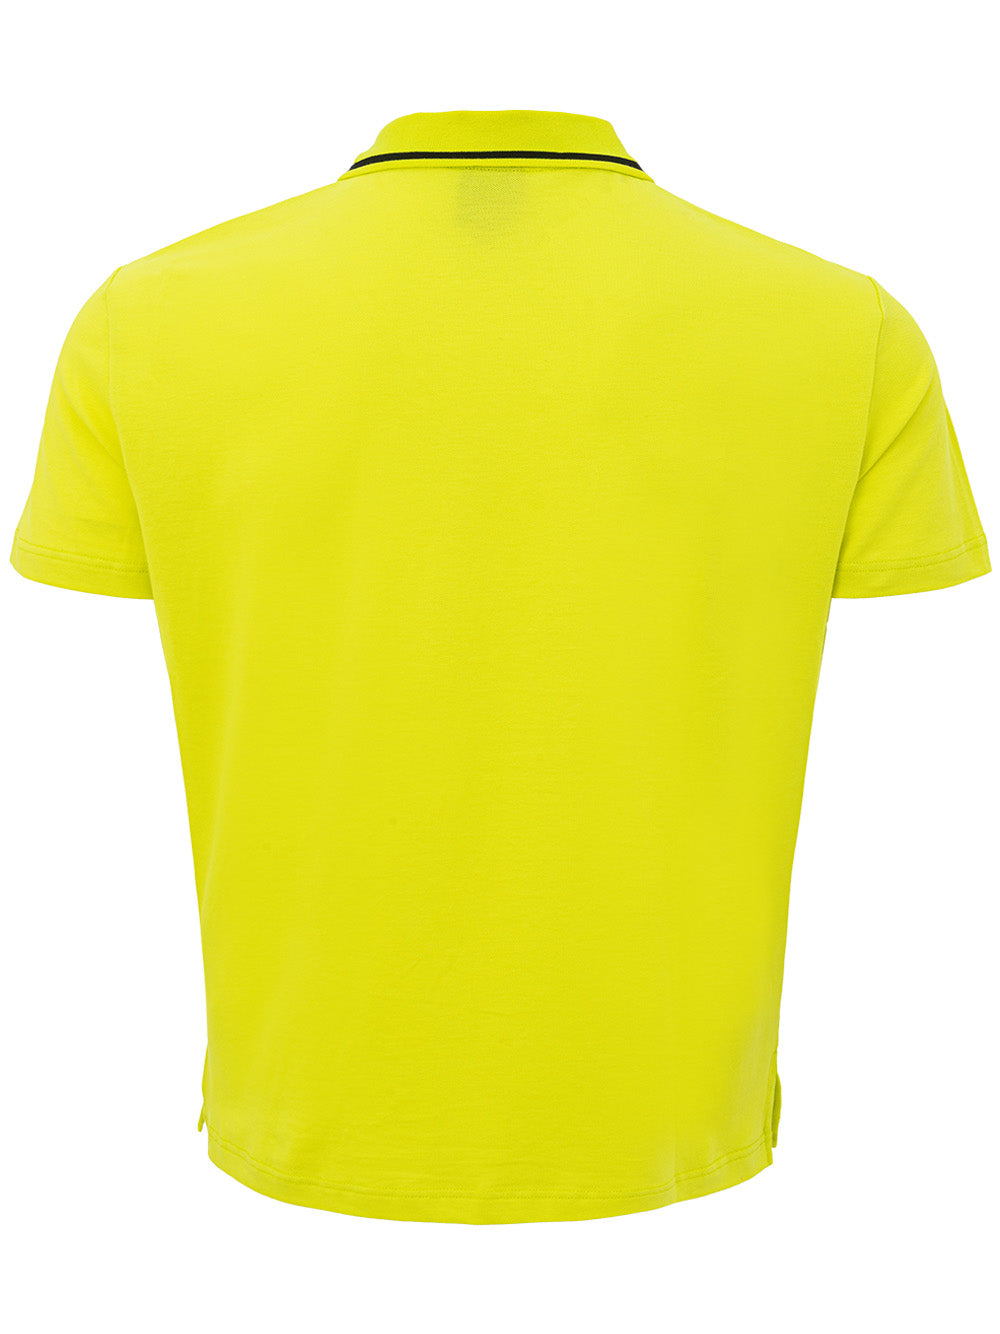 Armani Exchange yellow polo shirt in stretch cotton